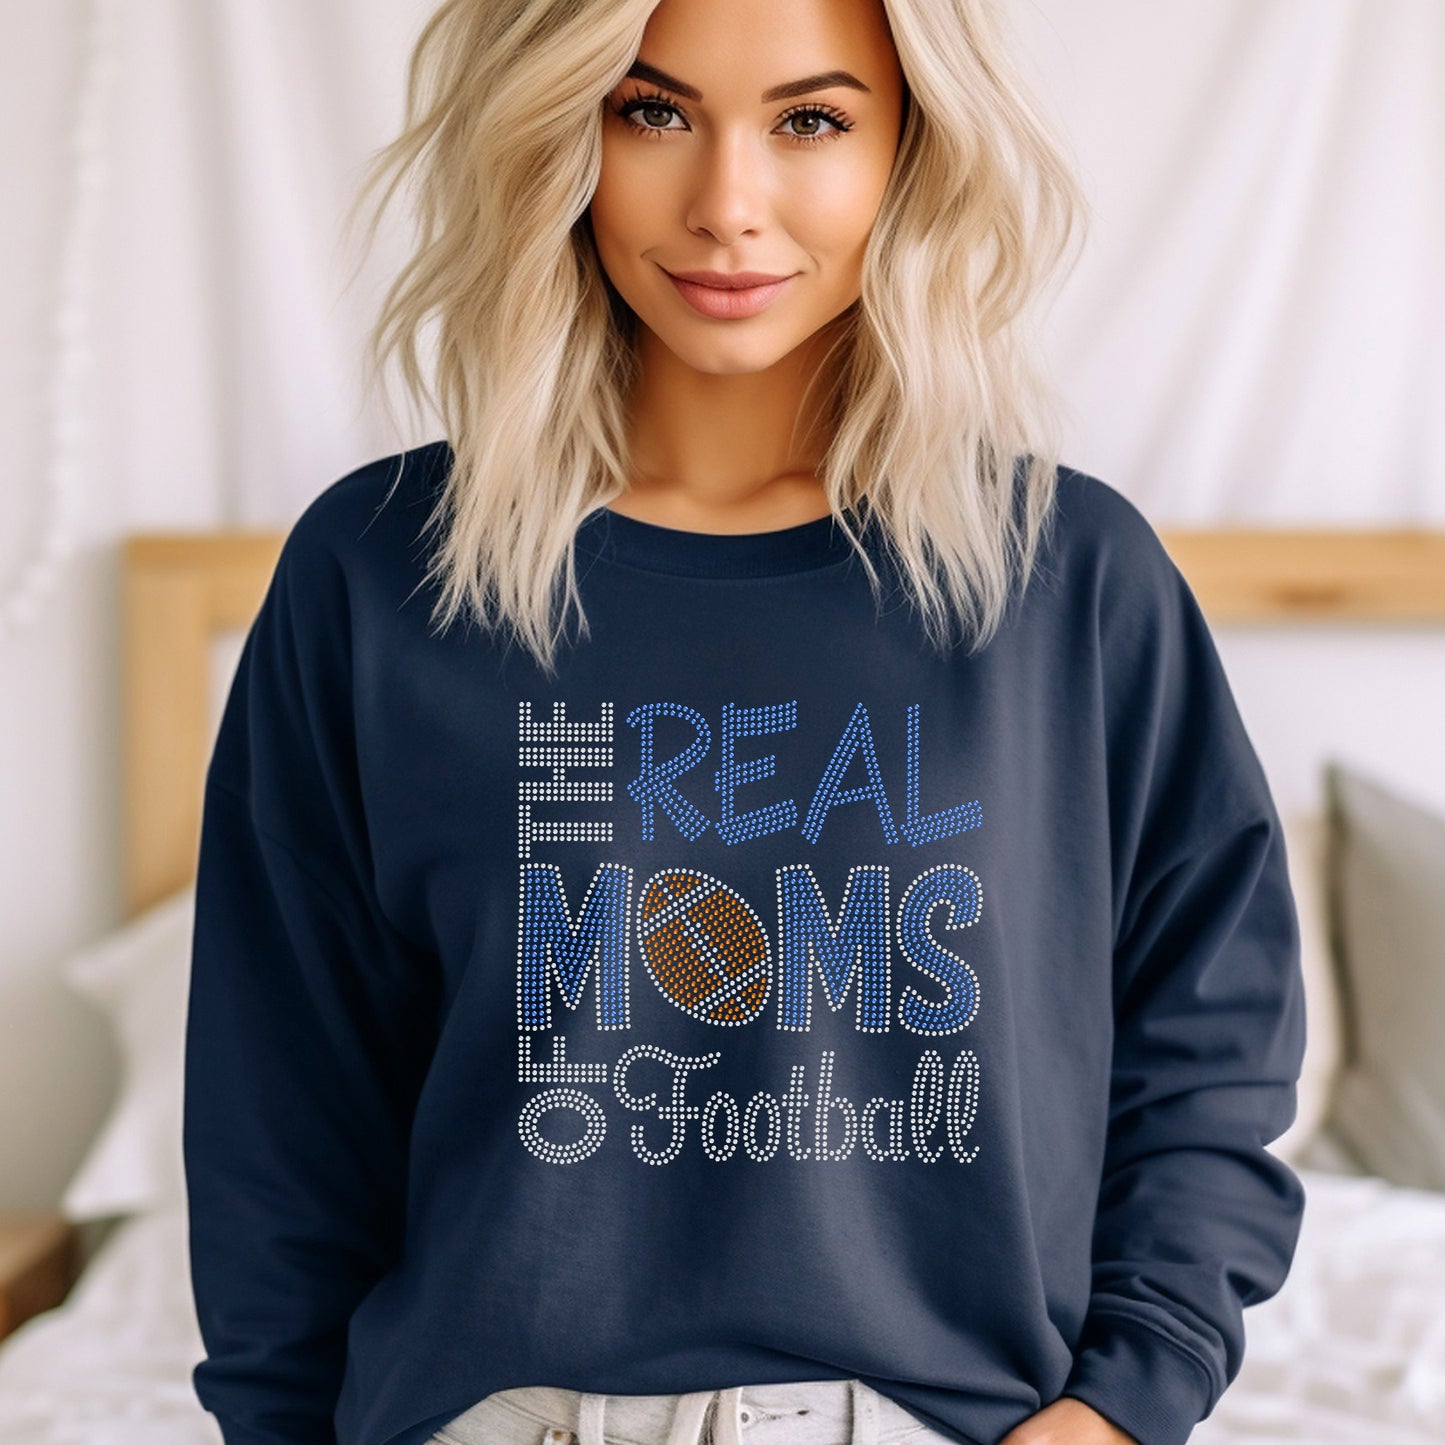 The Real Moms of Football RHINESTONE TRANSFER